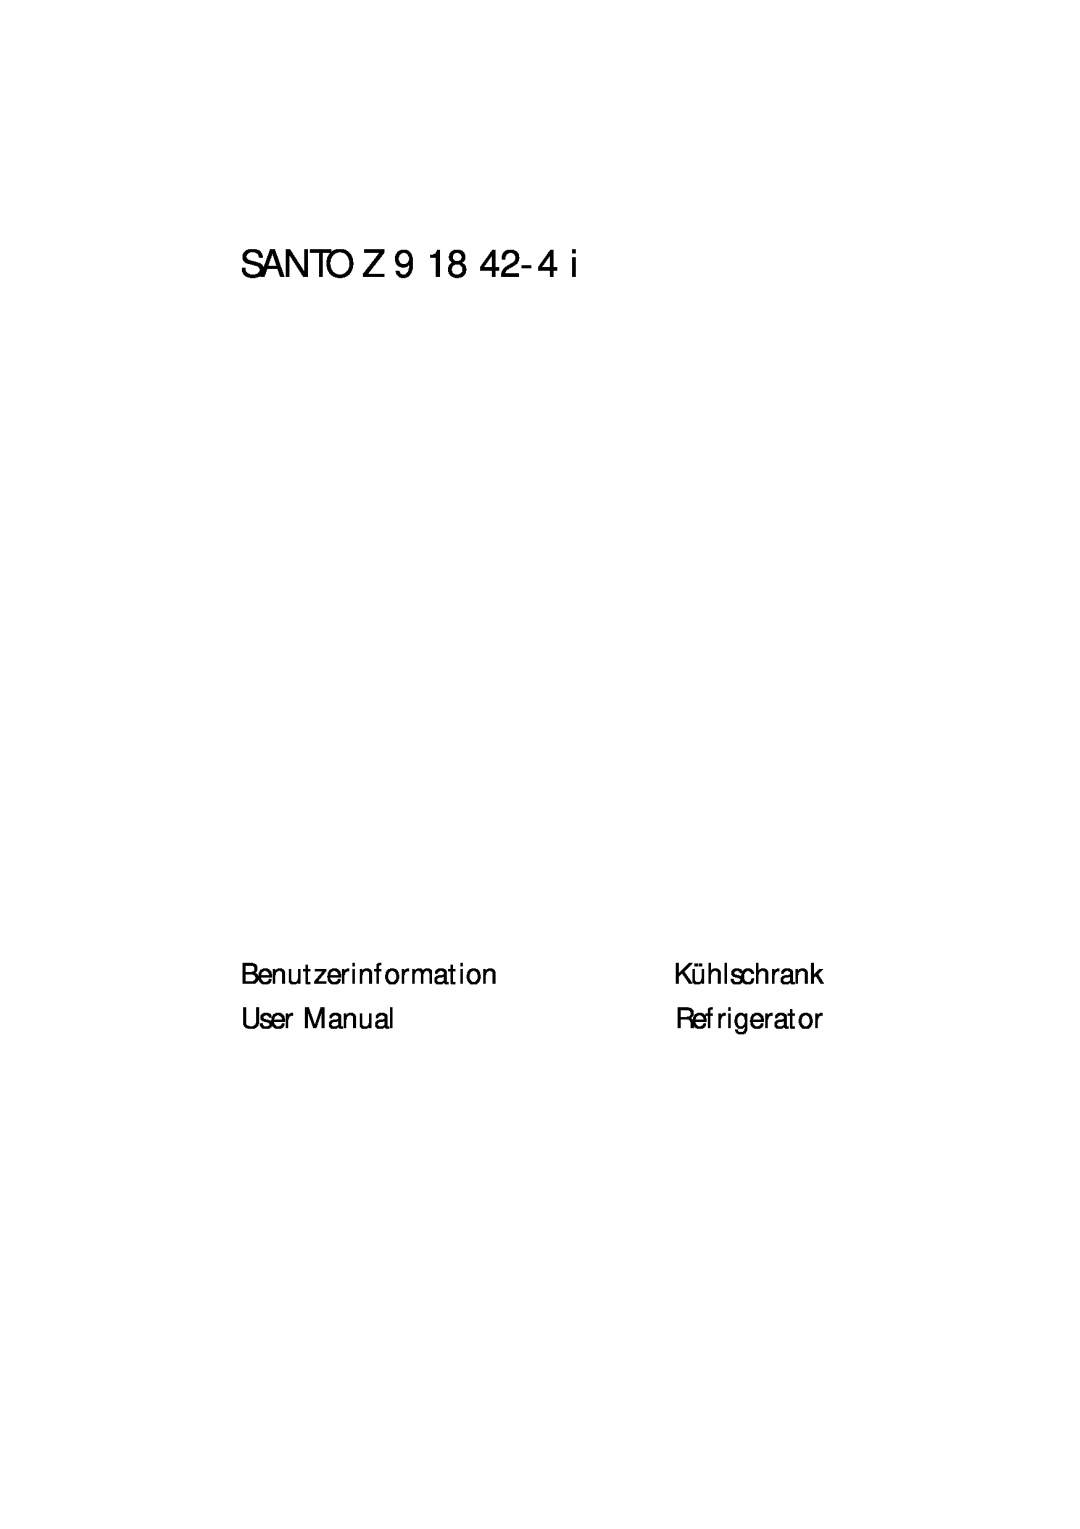 Electrolux Z 9 18 42-4 I user manual BenutzerinformationKühlschrank, SANTO Z 9 18 42-4 